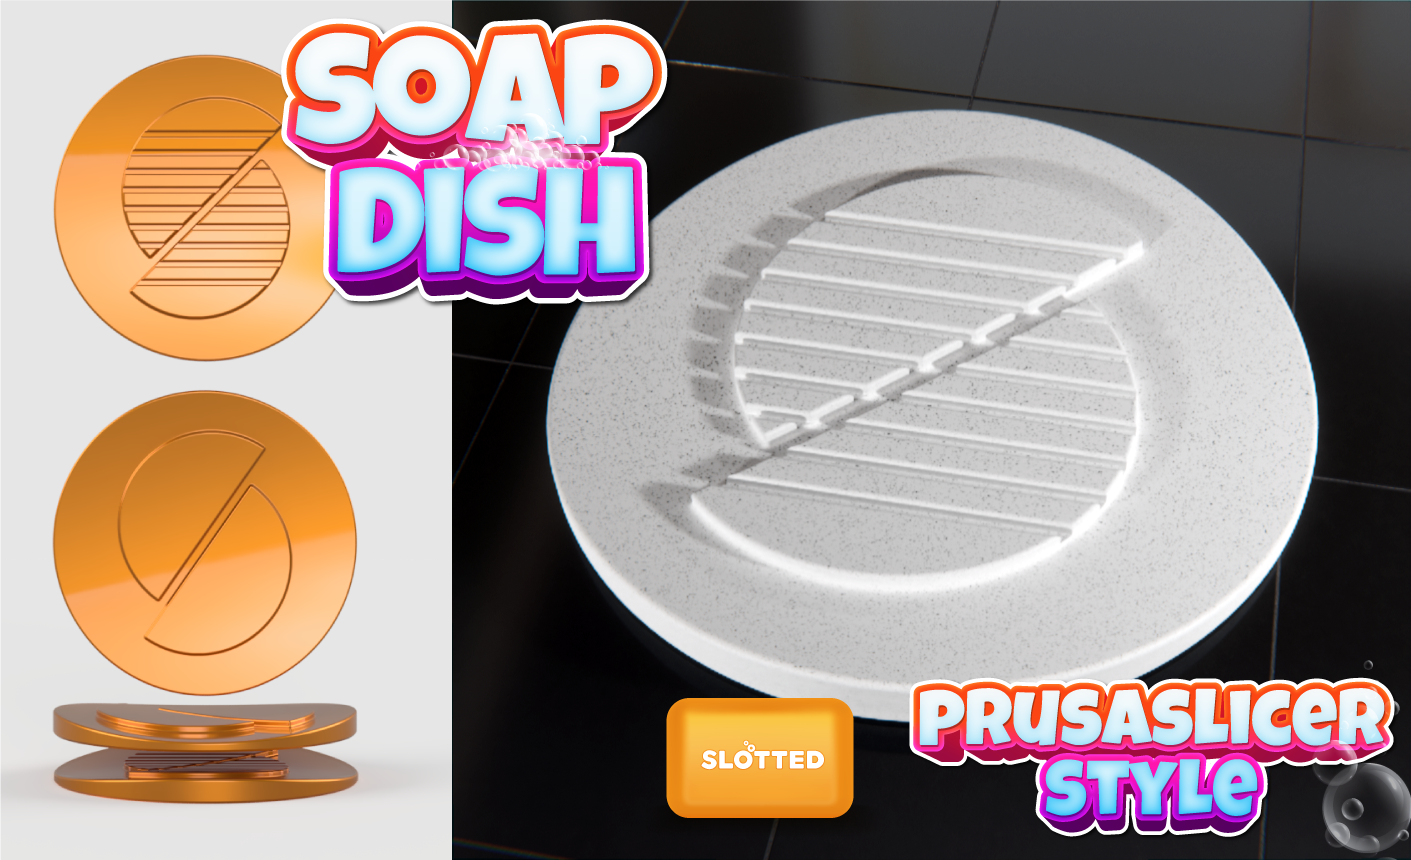 PrusaSlicer style soap dish